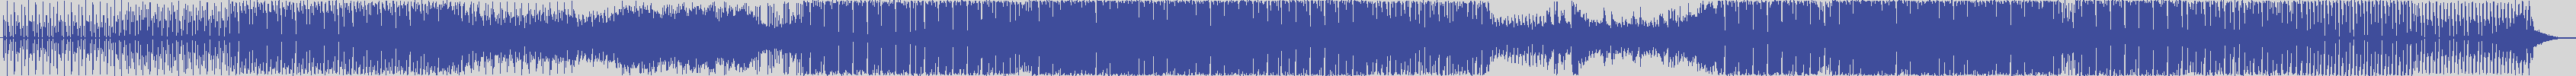 atomic_recordings [AR012] Gianluca Argante - Who Said [Original Mix] audio wave form